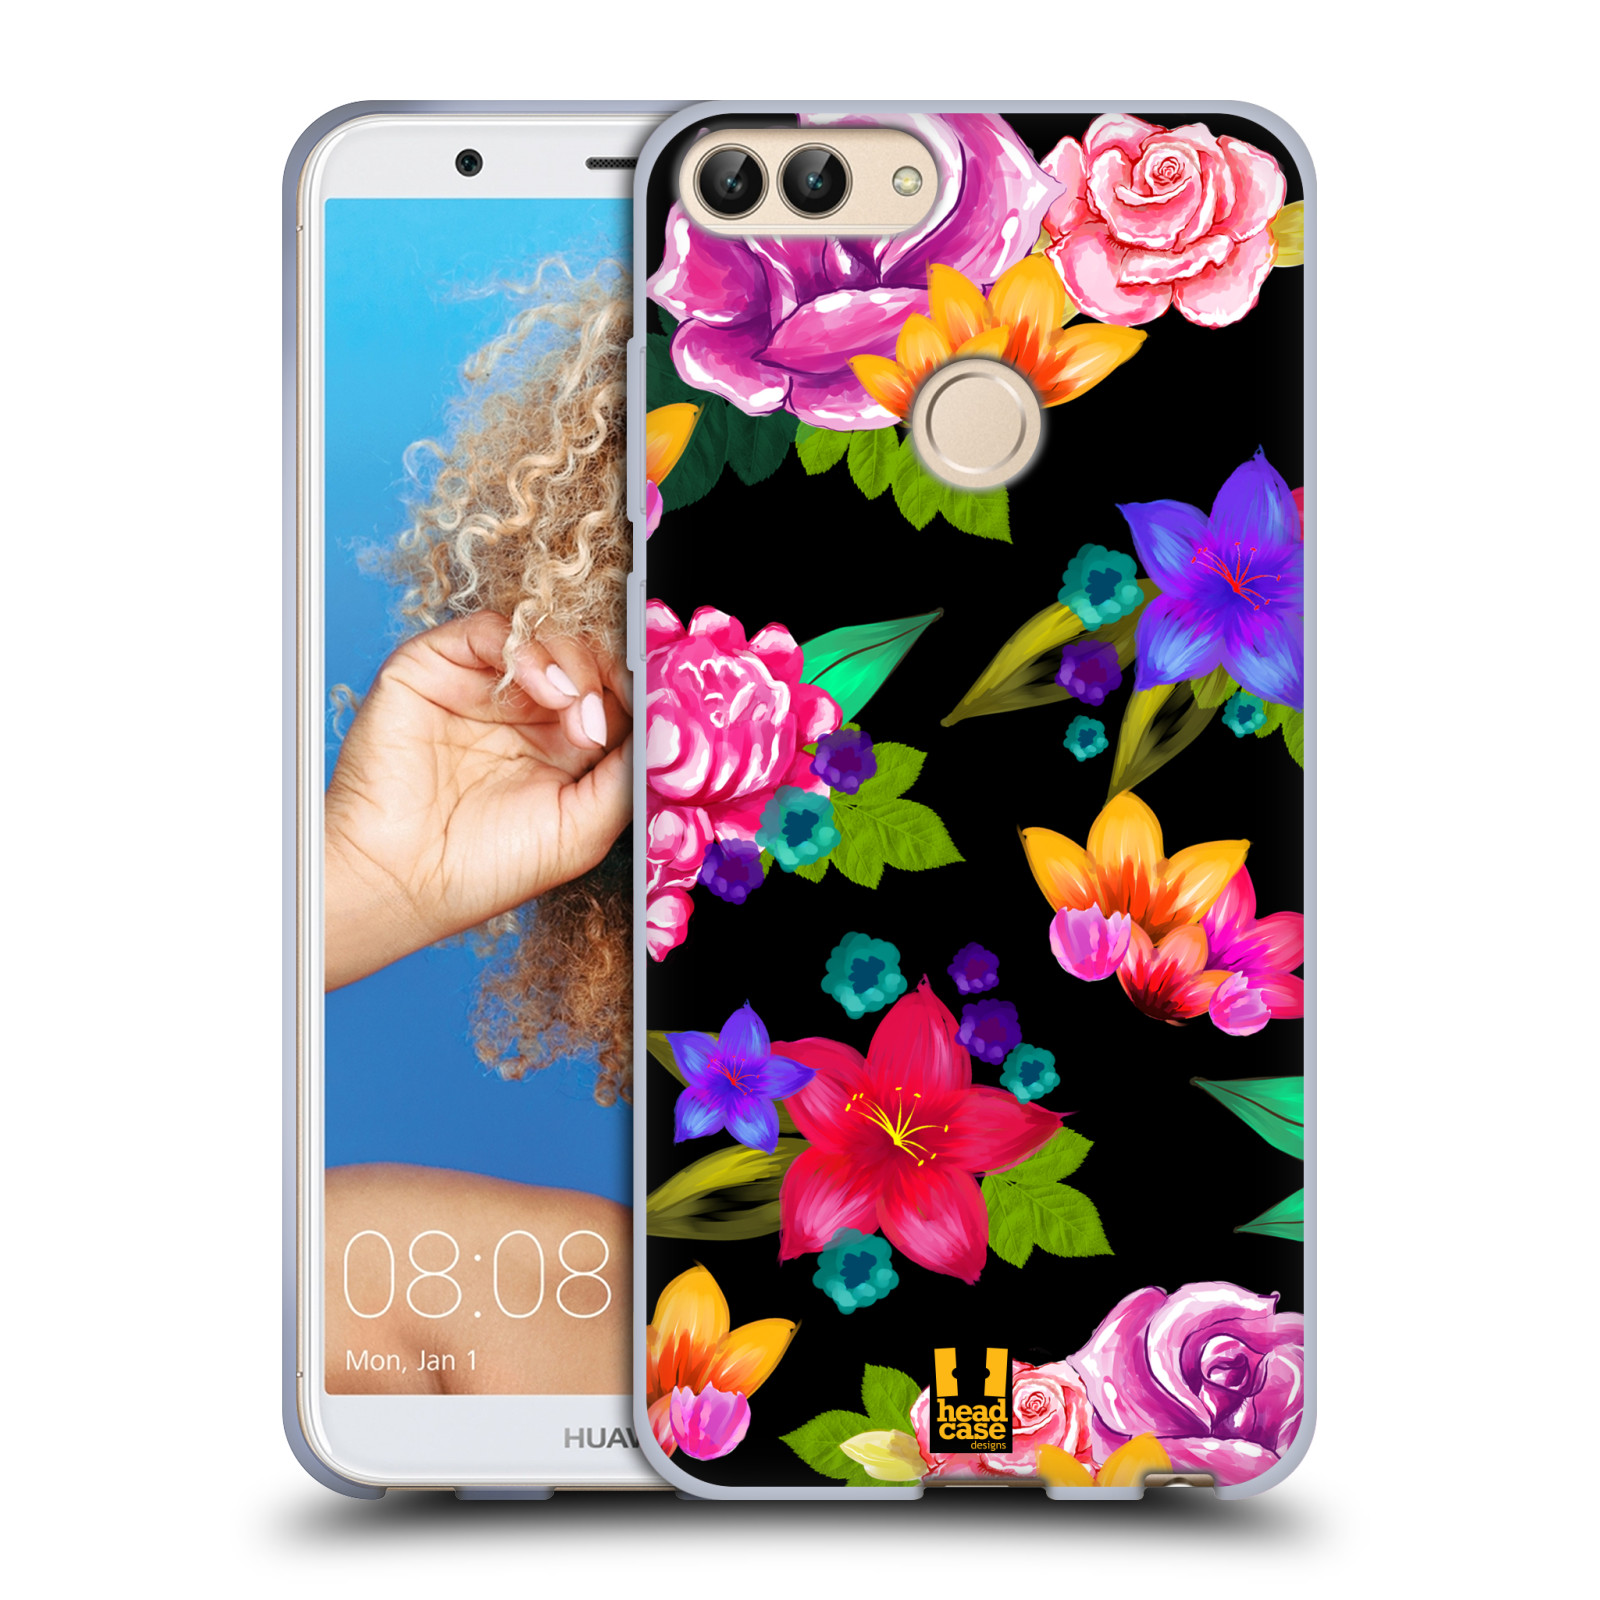 HEAD CASE silikon obal na mobil Huawei P SMART vzor Malované květiny barevné ČERNÁ